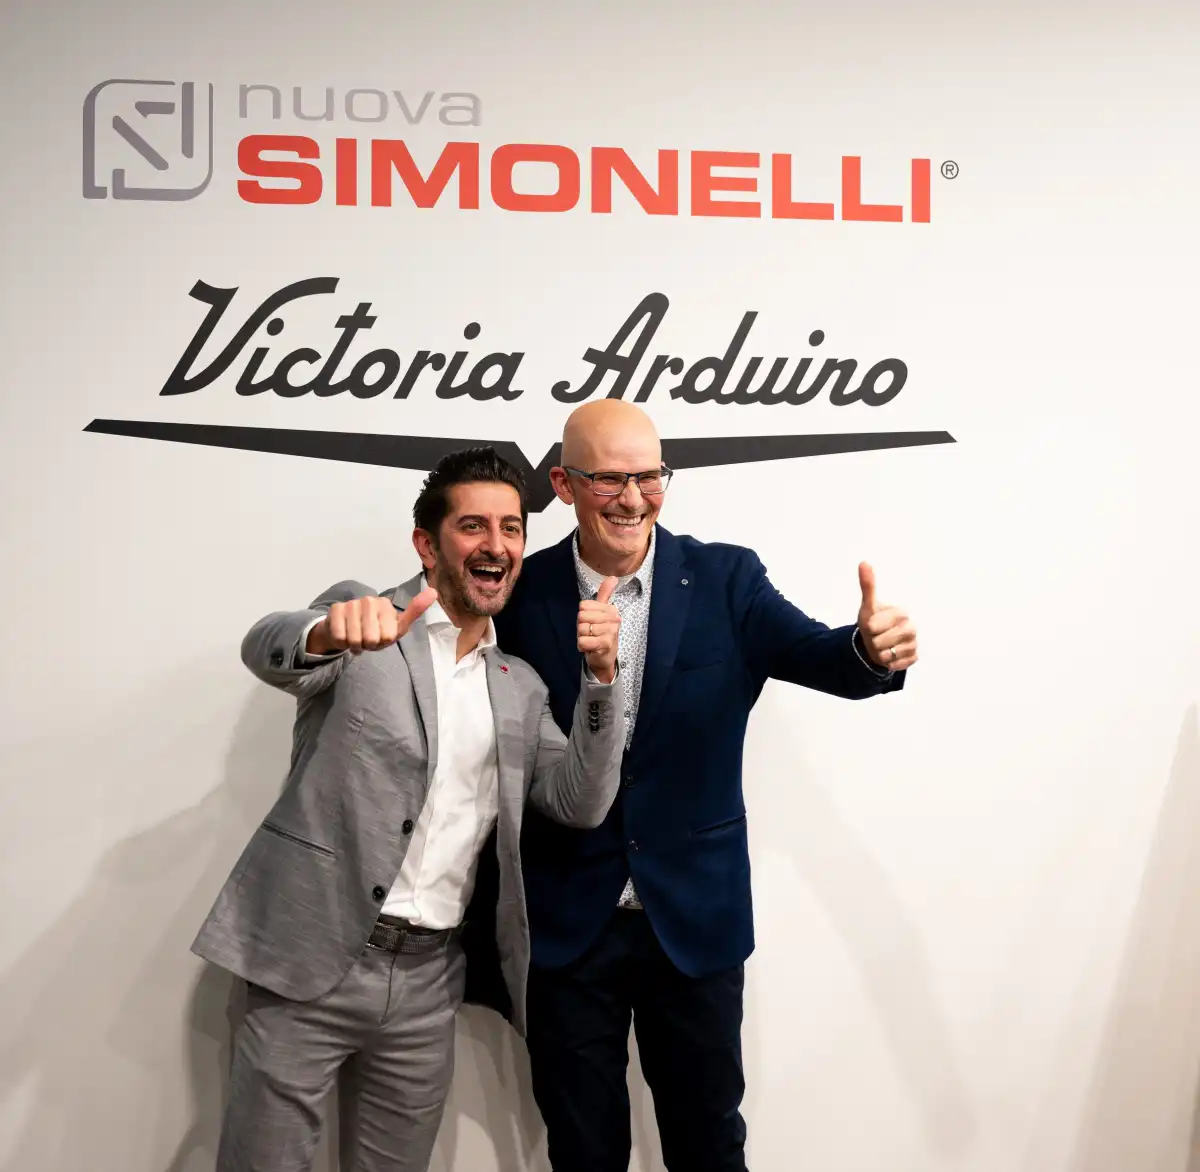 Featured image for “Simonelli Group Australia”